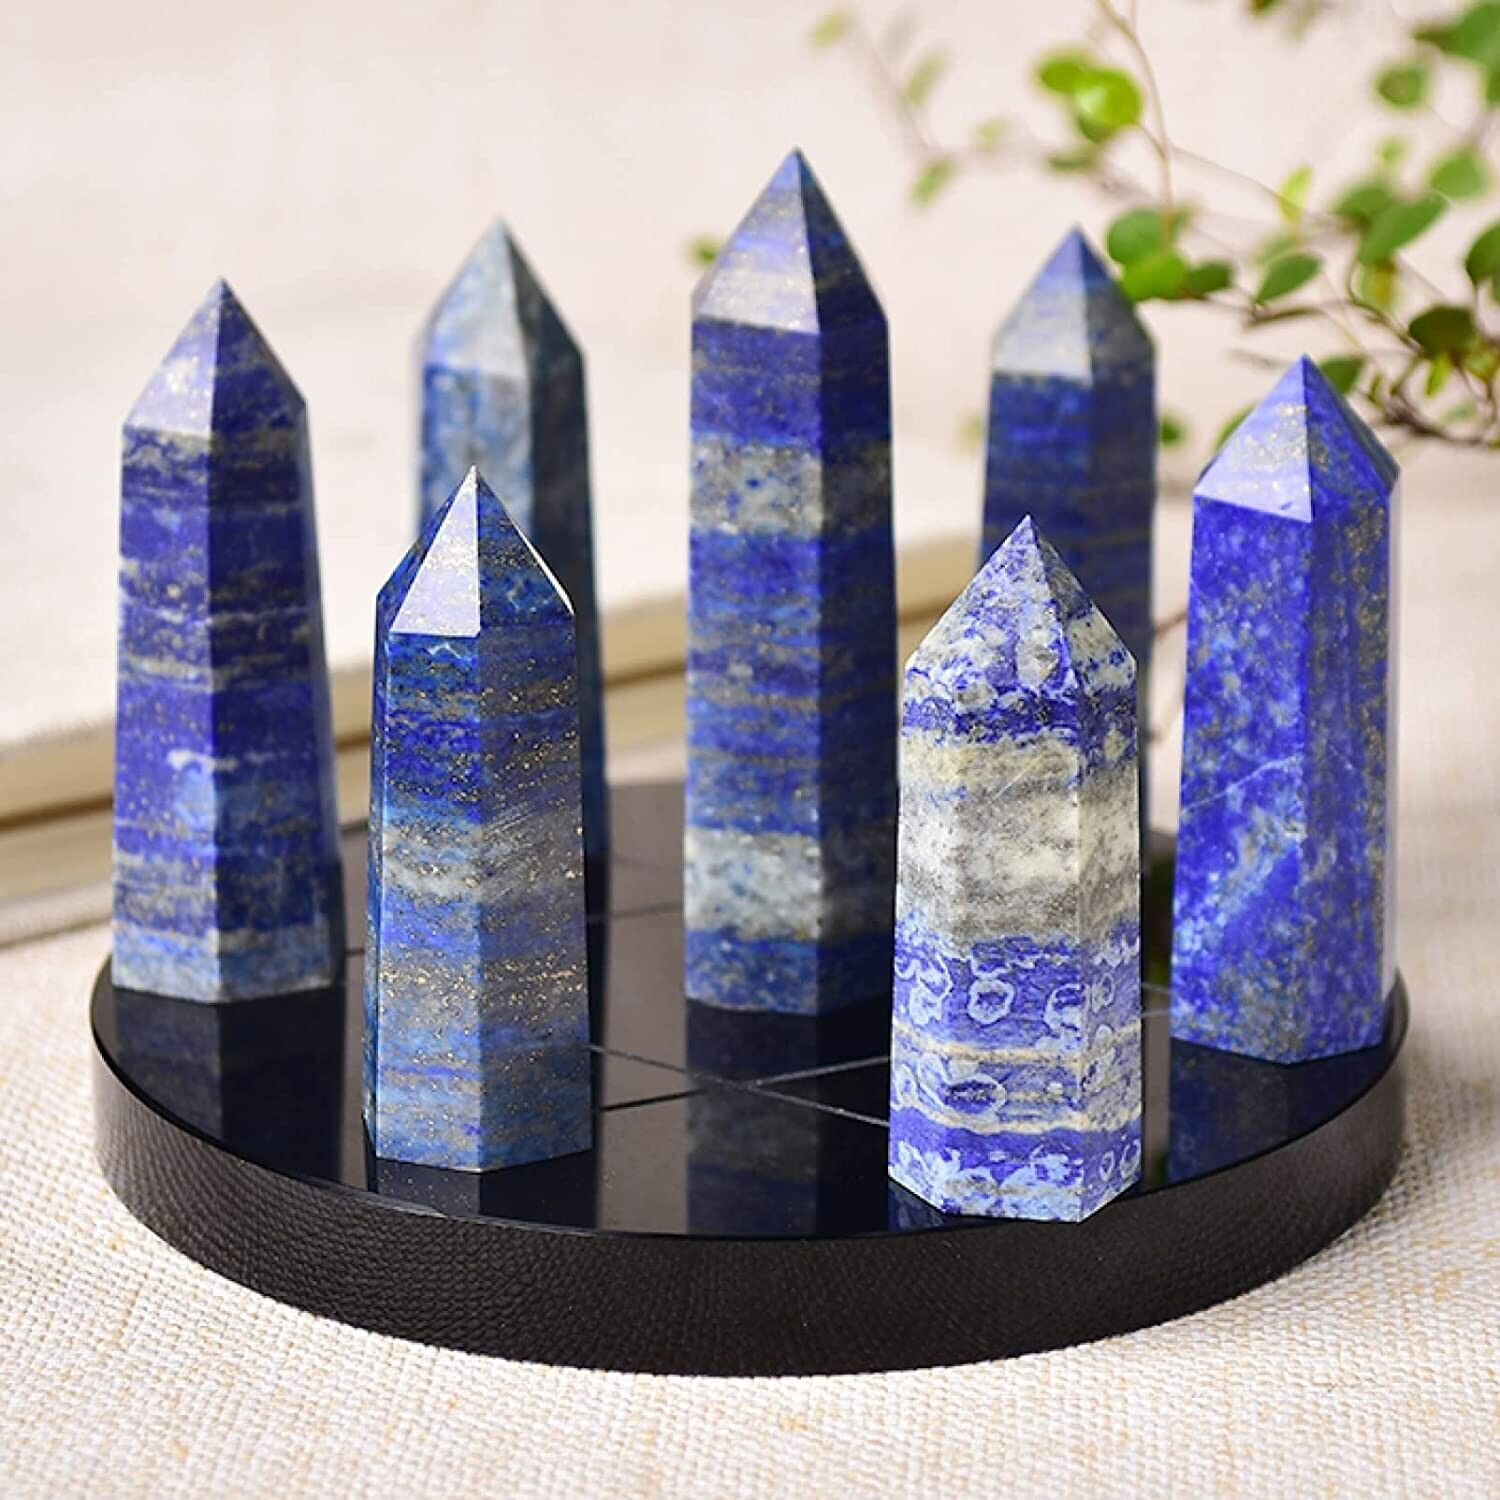 Wholesale Lot 1 Lb Natural Lapis Lazuli Stone Obelisk Tower Crystal Wand Energy